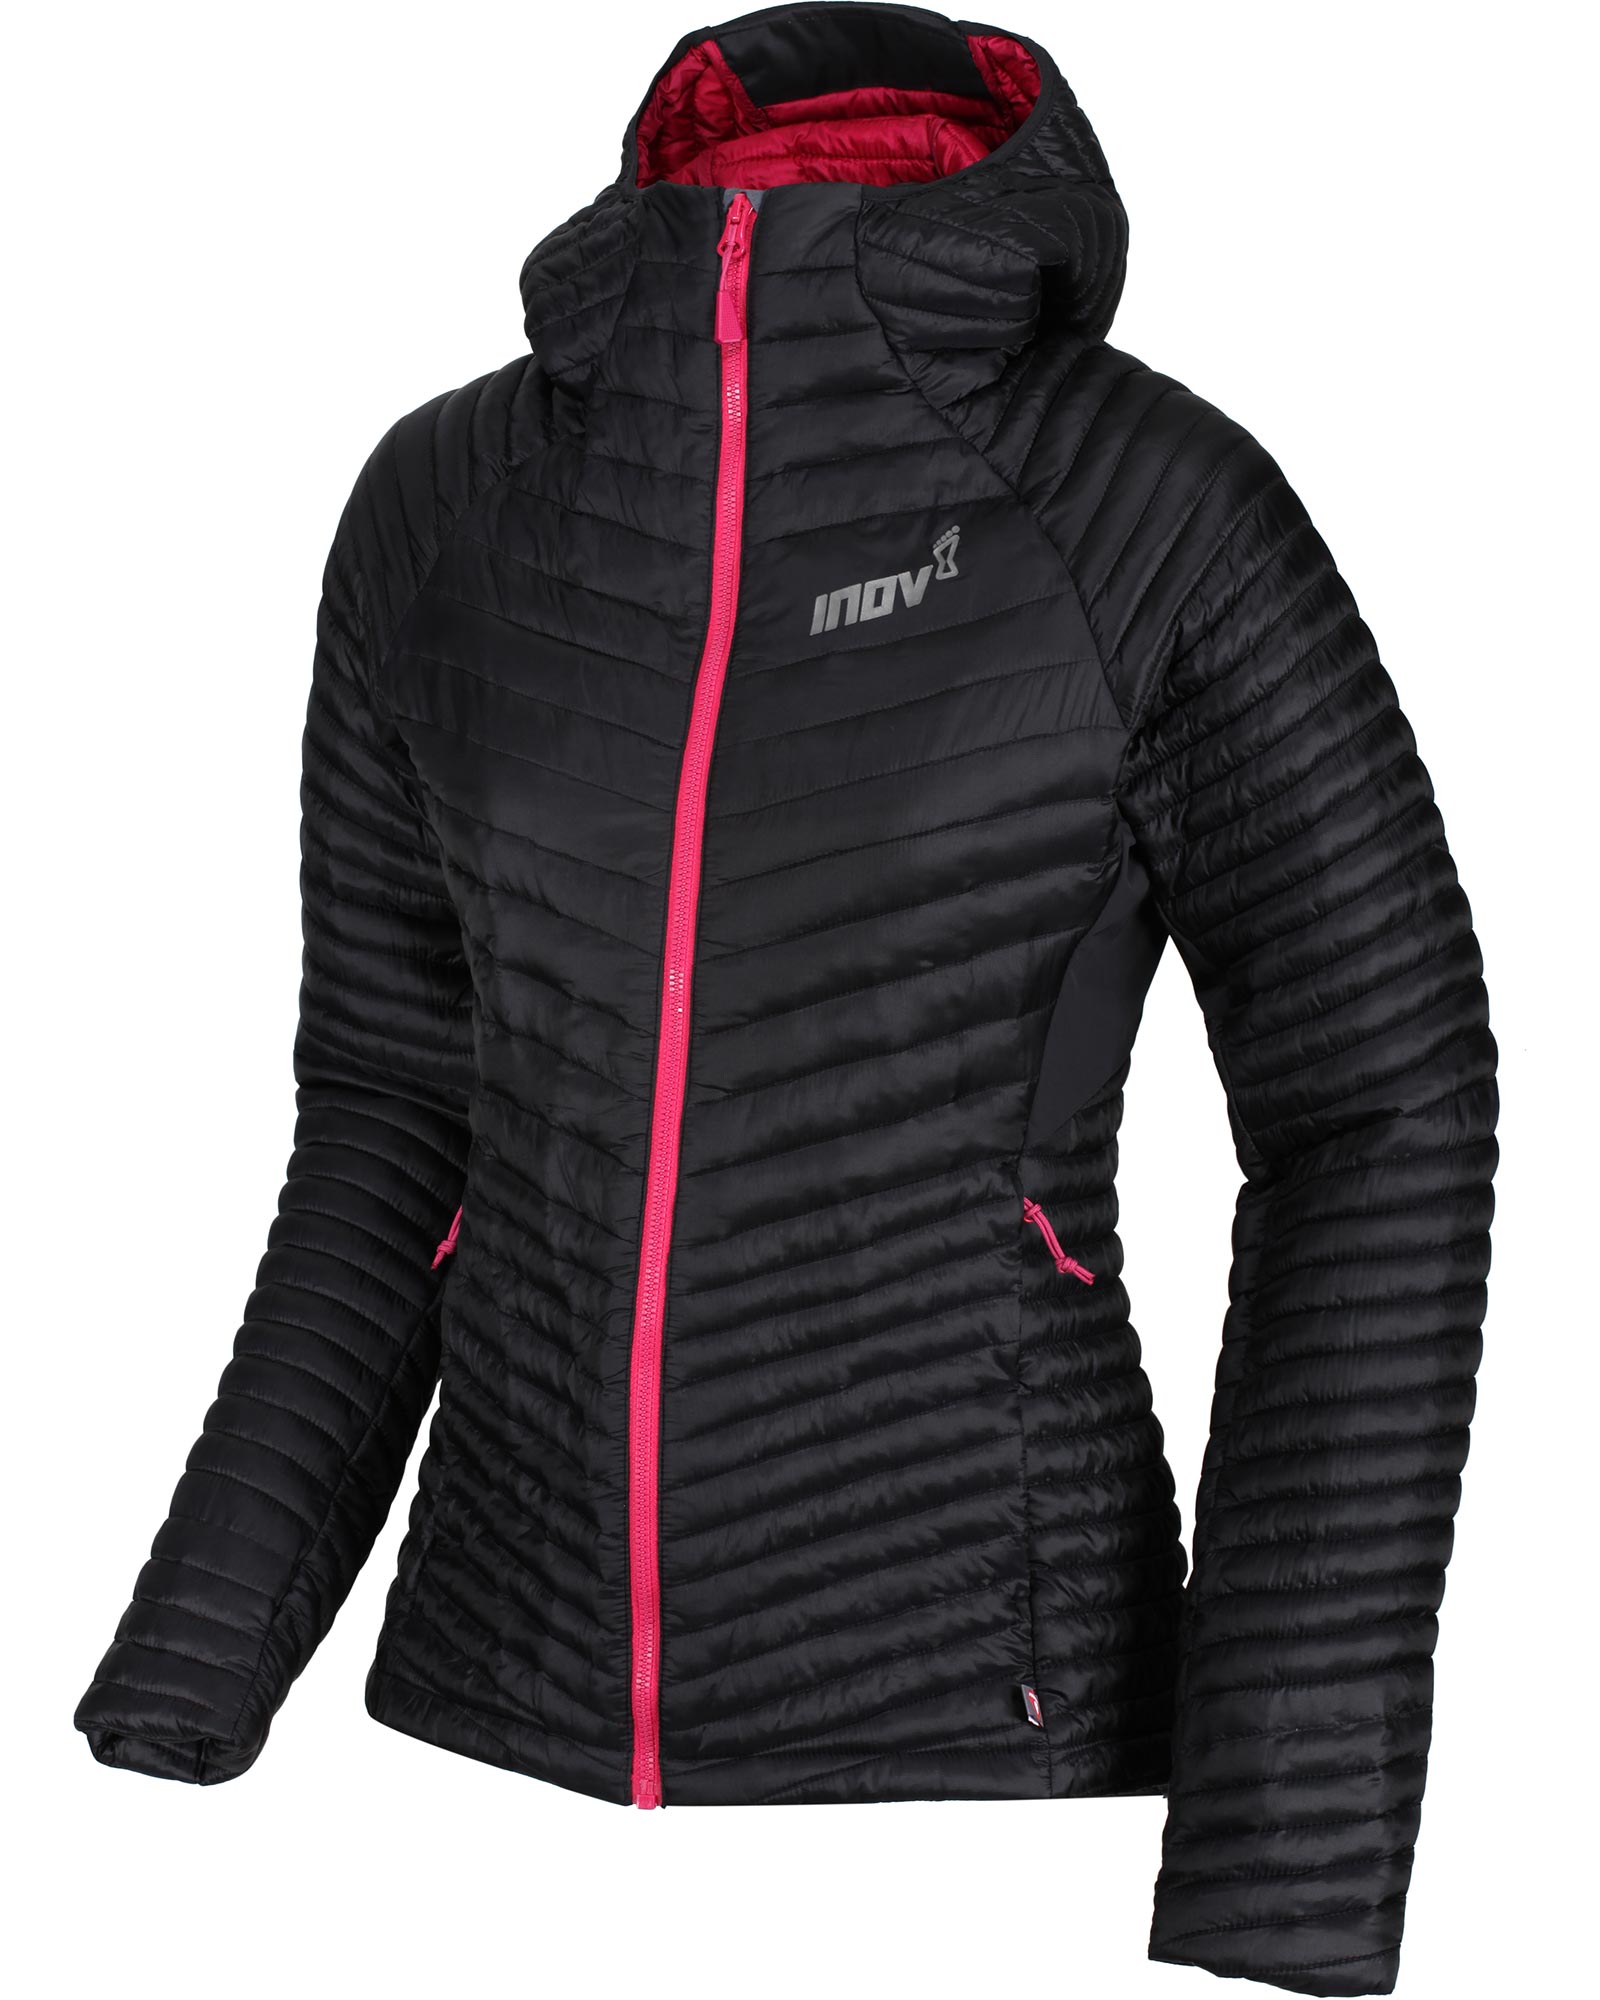 Inov 8 Full Zip Thermoshell Pro Women’s Jacket - black 14